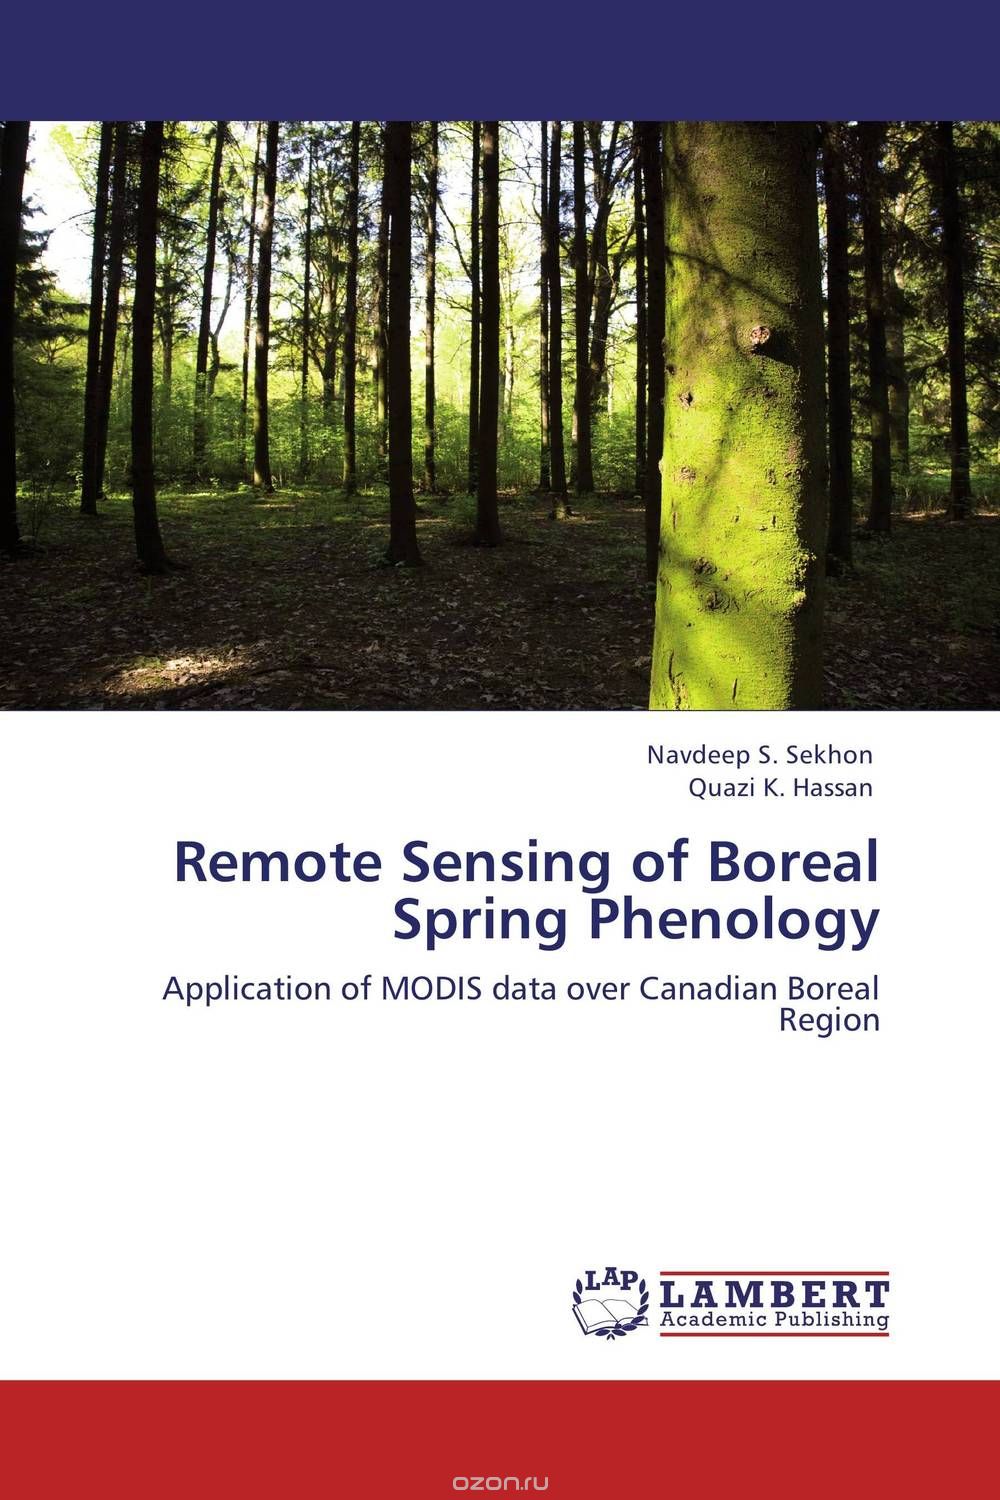 Скачать книгу "Remote Sensing of Boreal Spring Phenology"